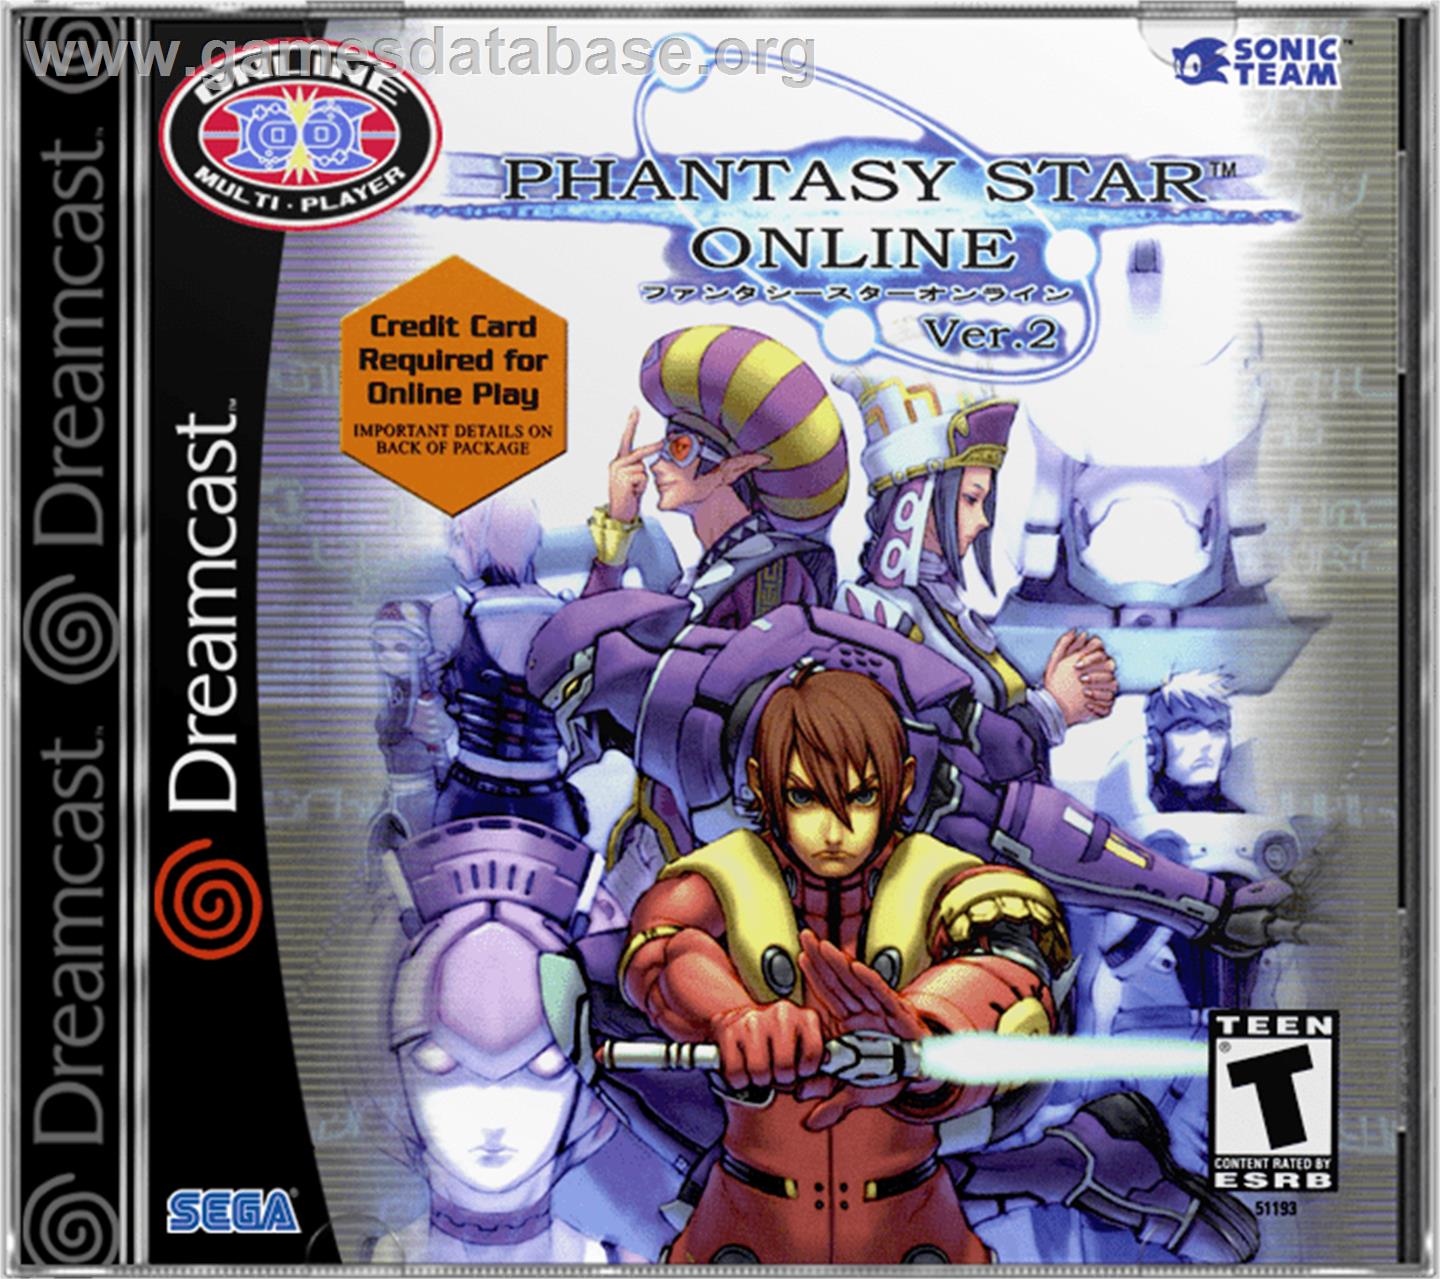 Phantasy Star Online Ver. 2 - Sega Dreamcast - Artwork - Box